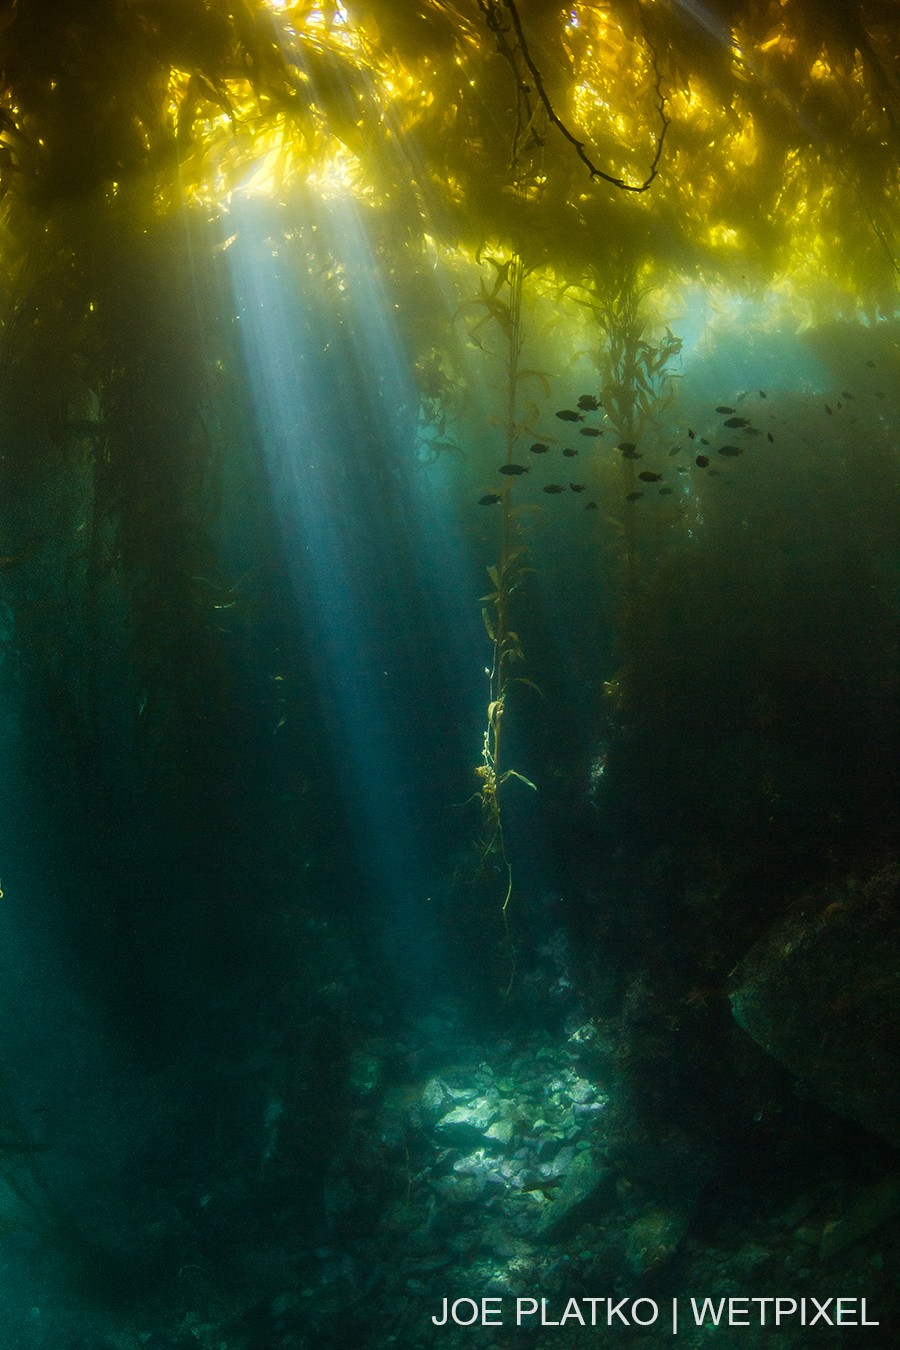 A shaft of light cuts through the kelp canopy, illuminating the rocky floor below.